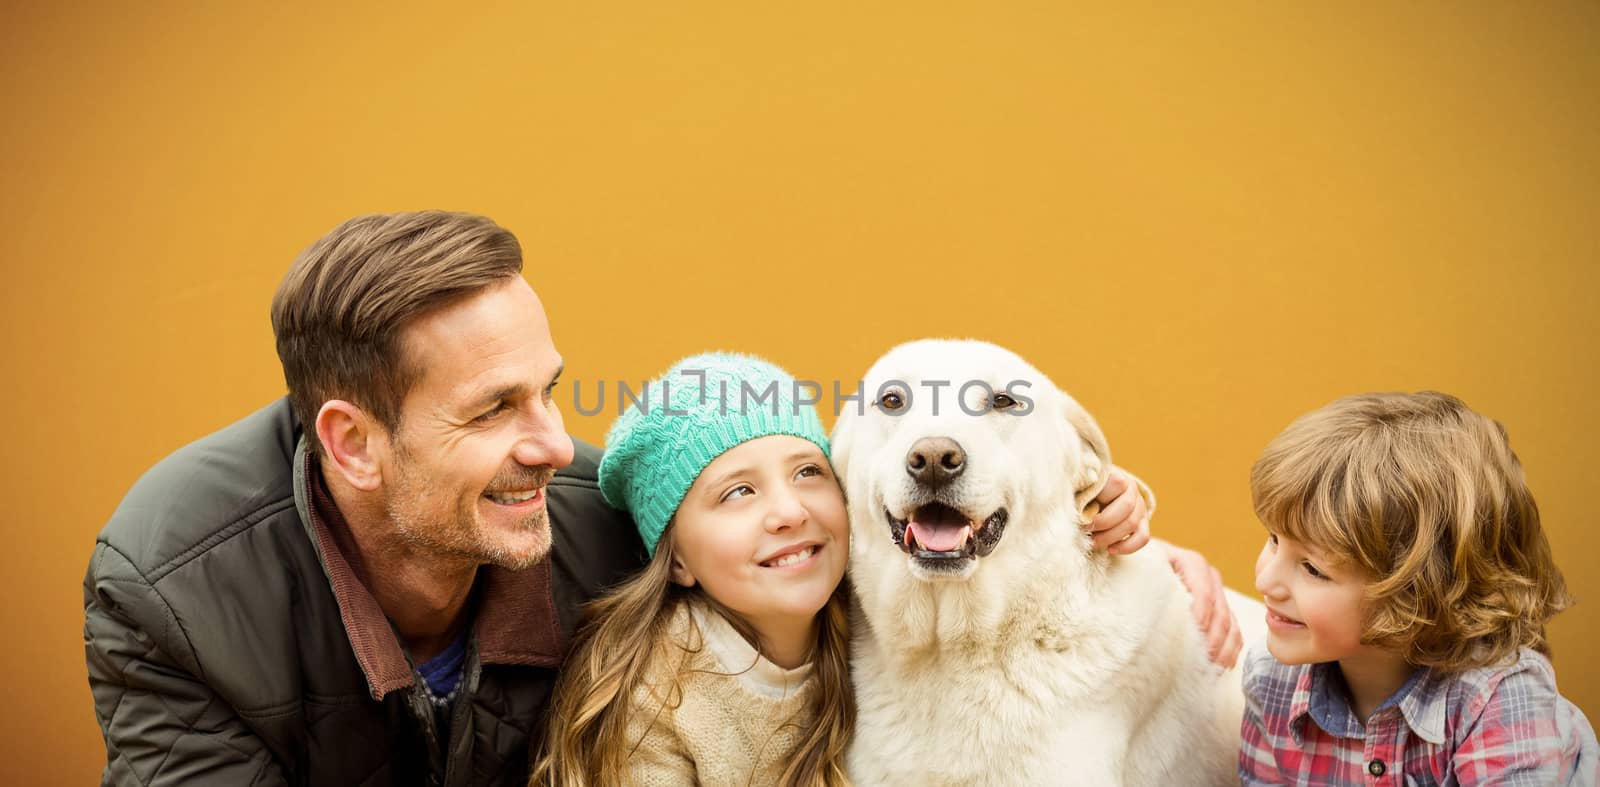  Happy family enjoying with dog in leaves against orange background